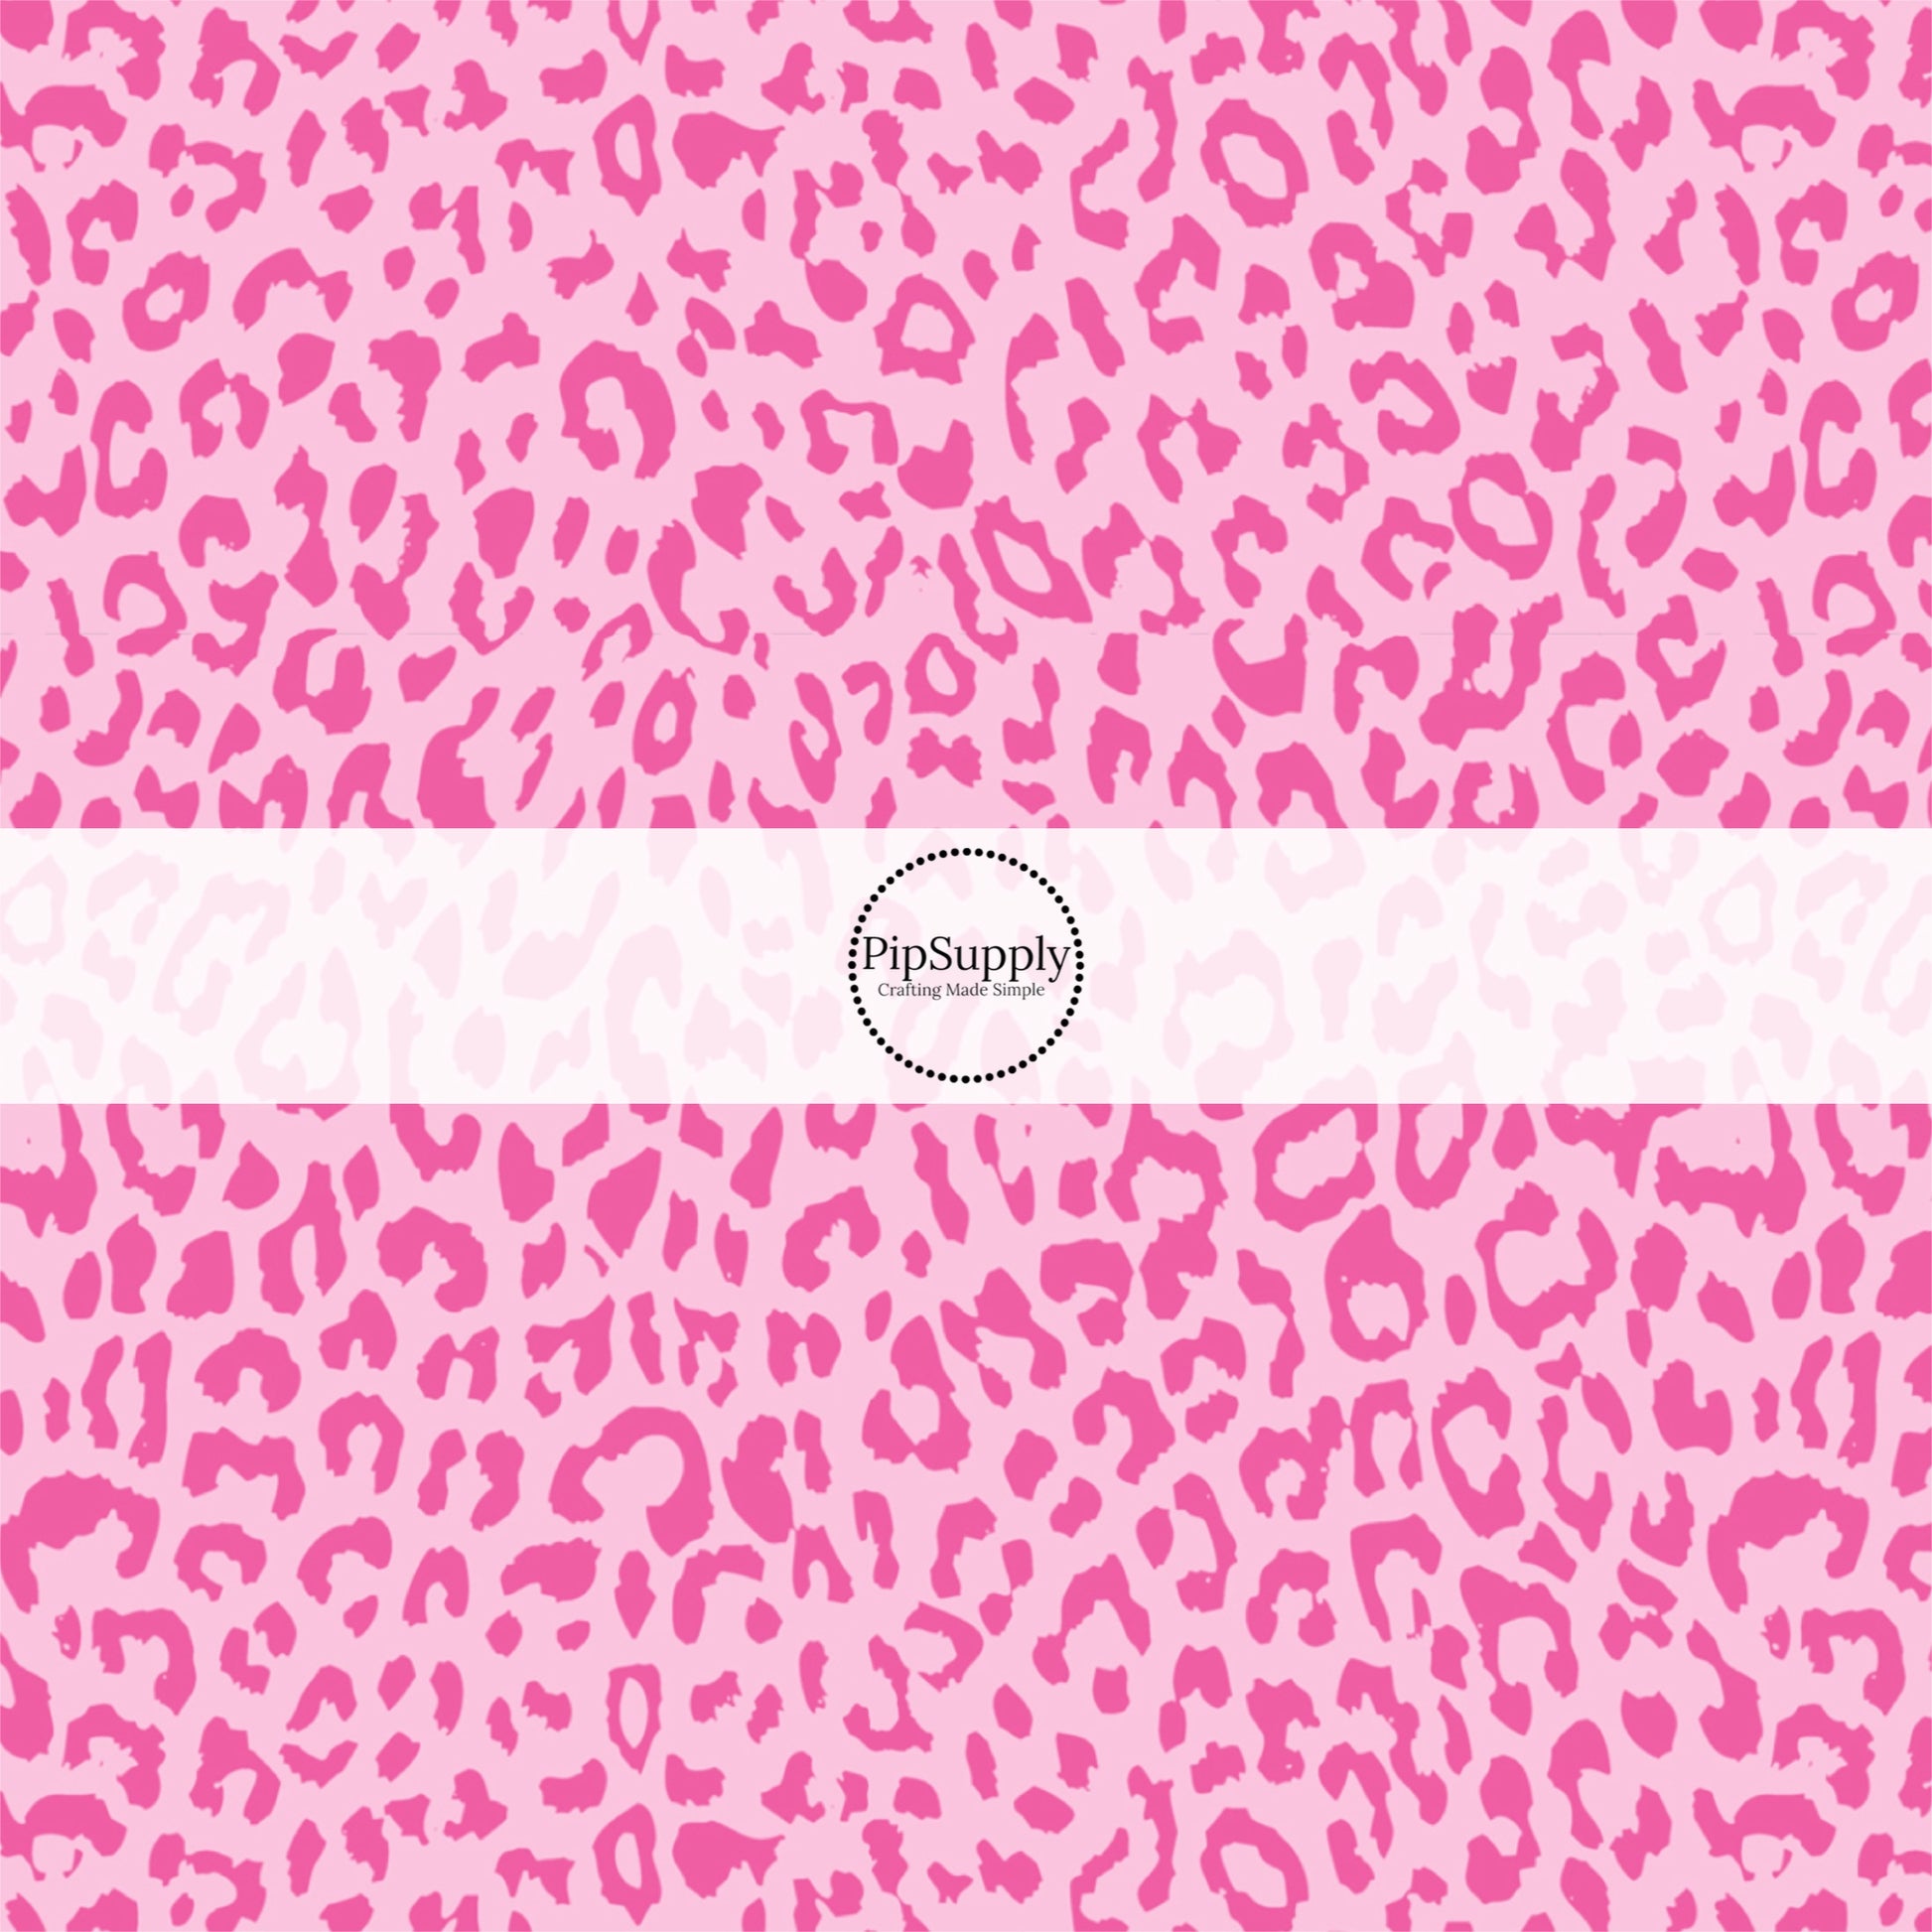 neon pink leopard print wallpaper